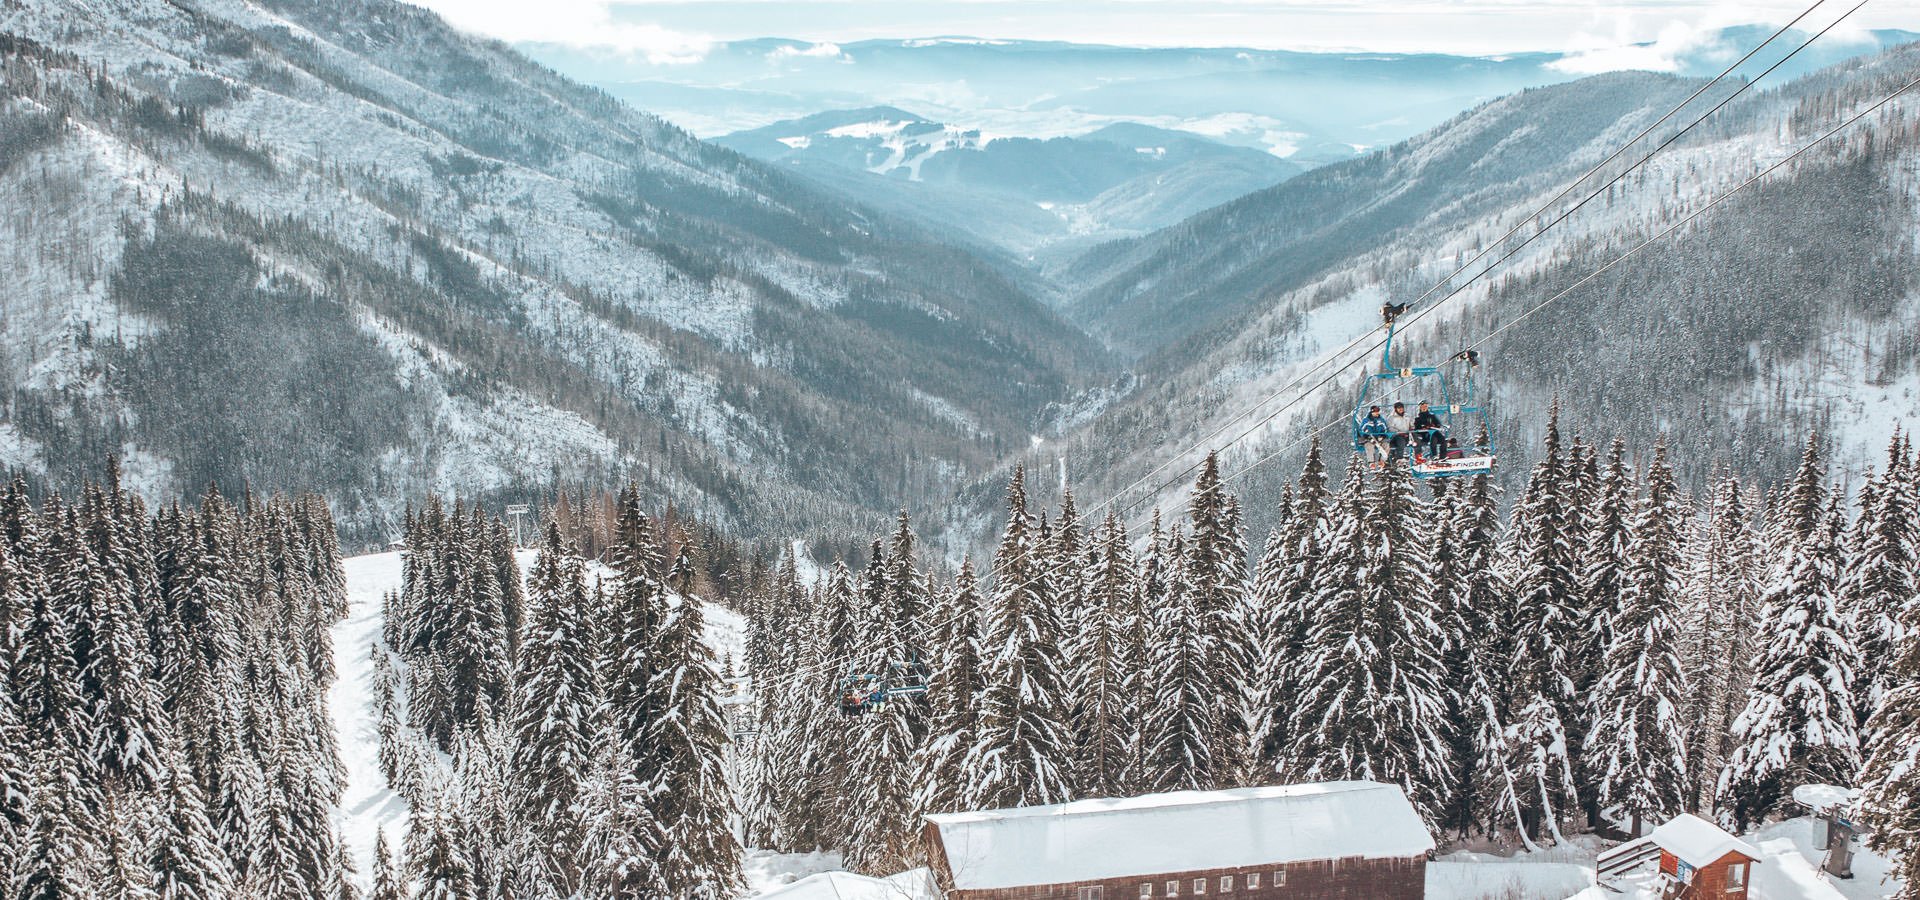 How To Plan A Snowboarding Holiday In Jasná, Slovakia_FI.2_5184 x 3456-2